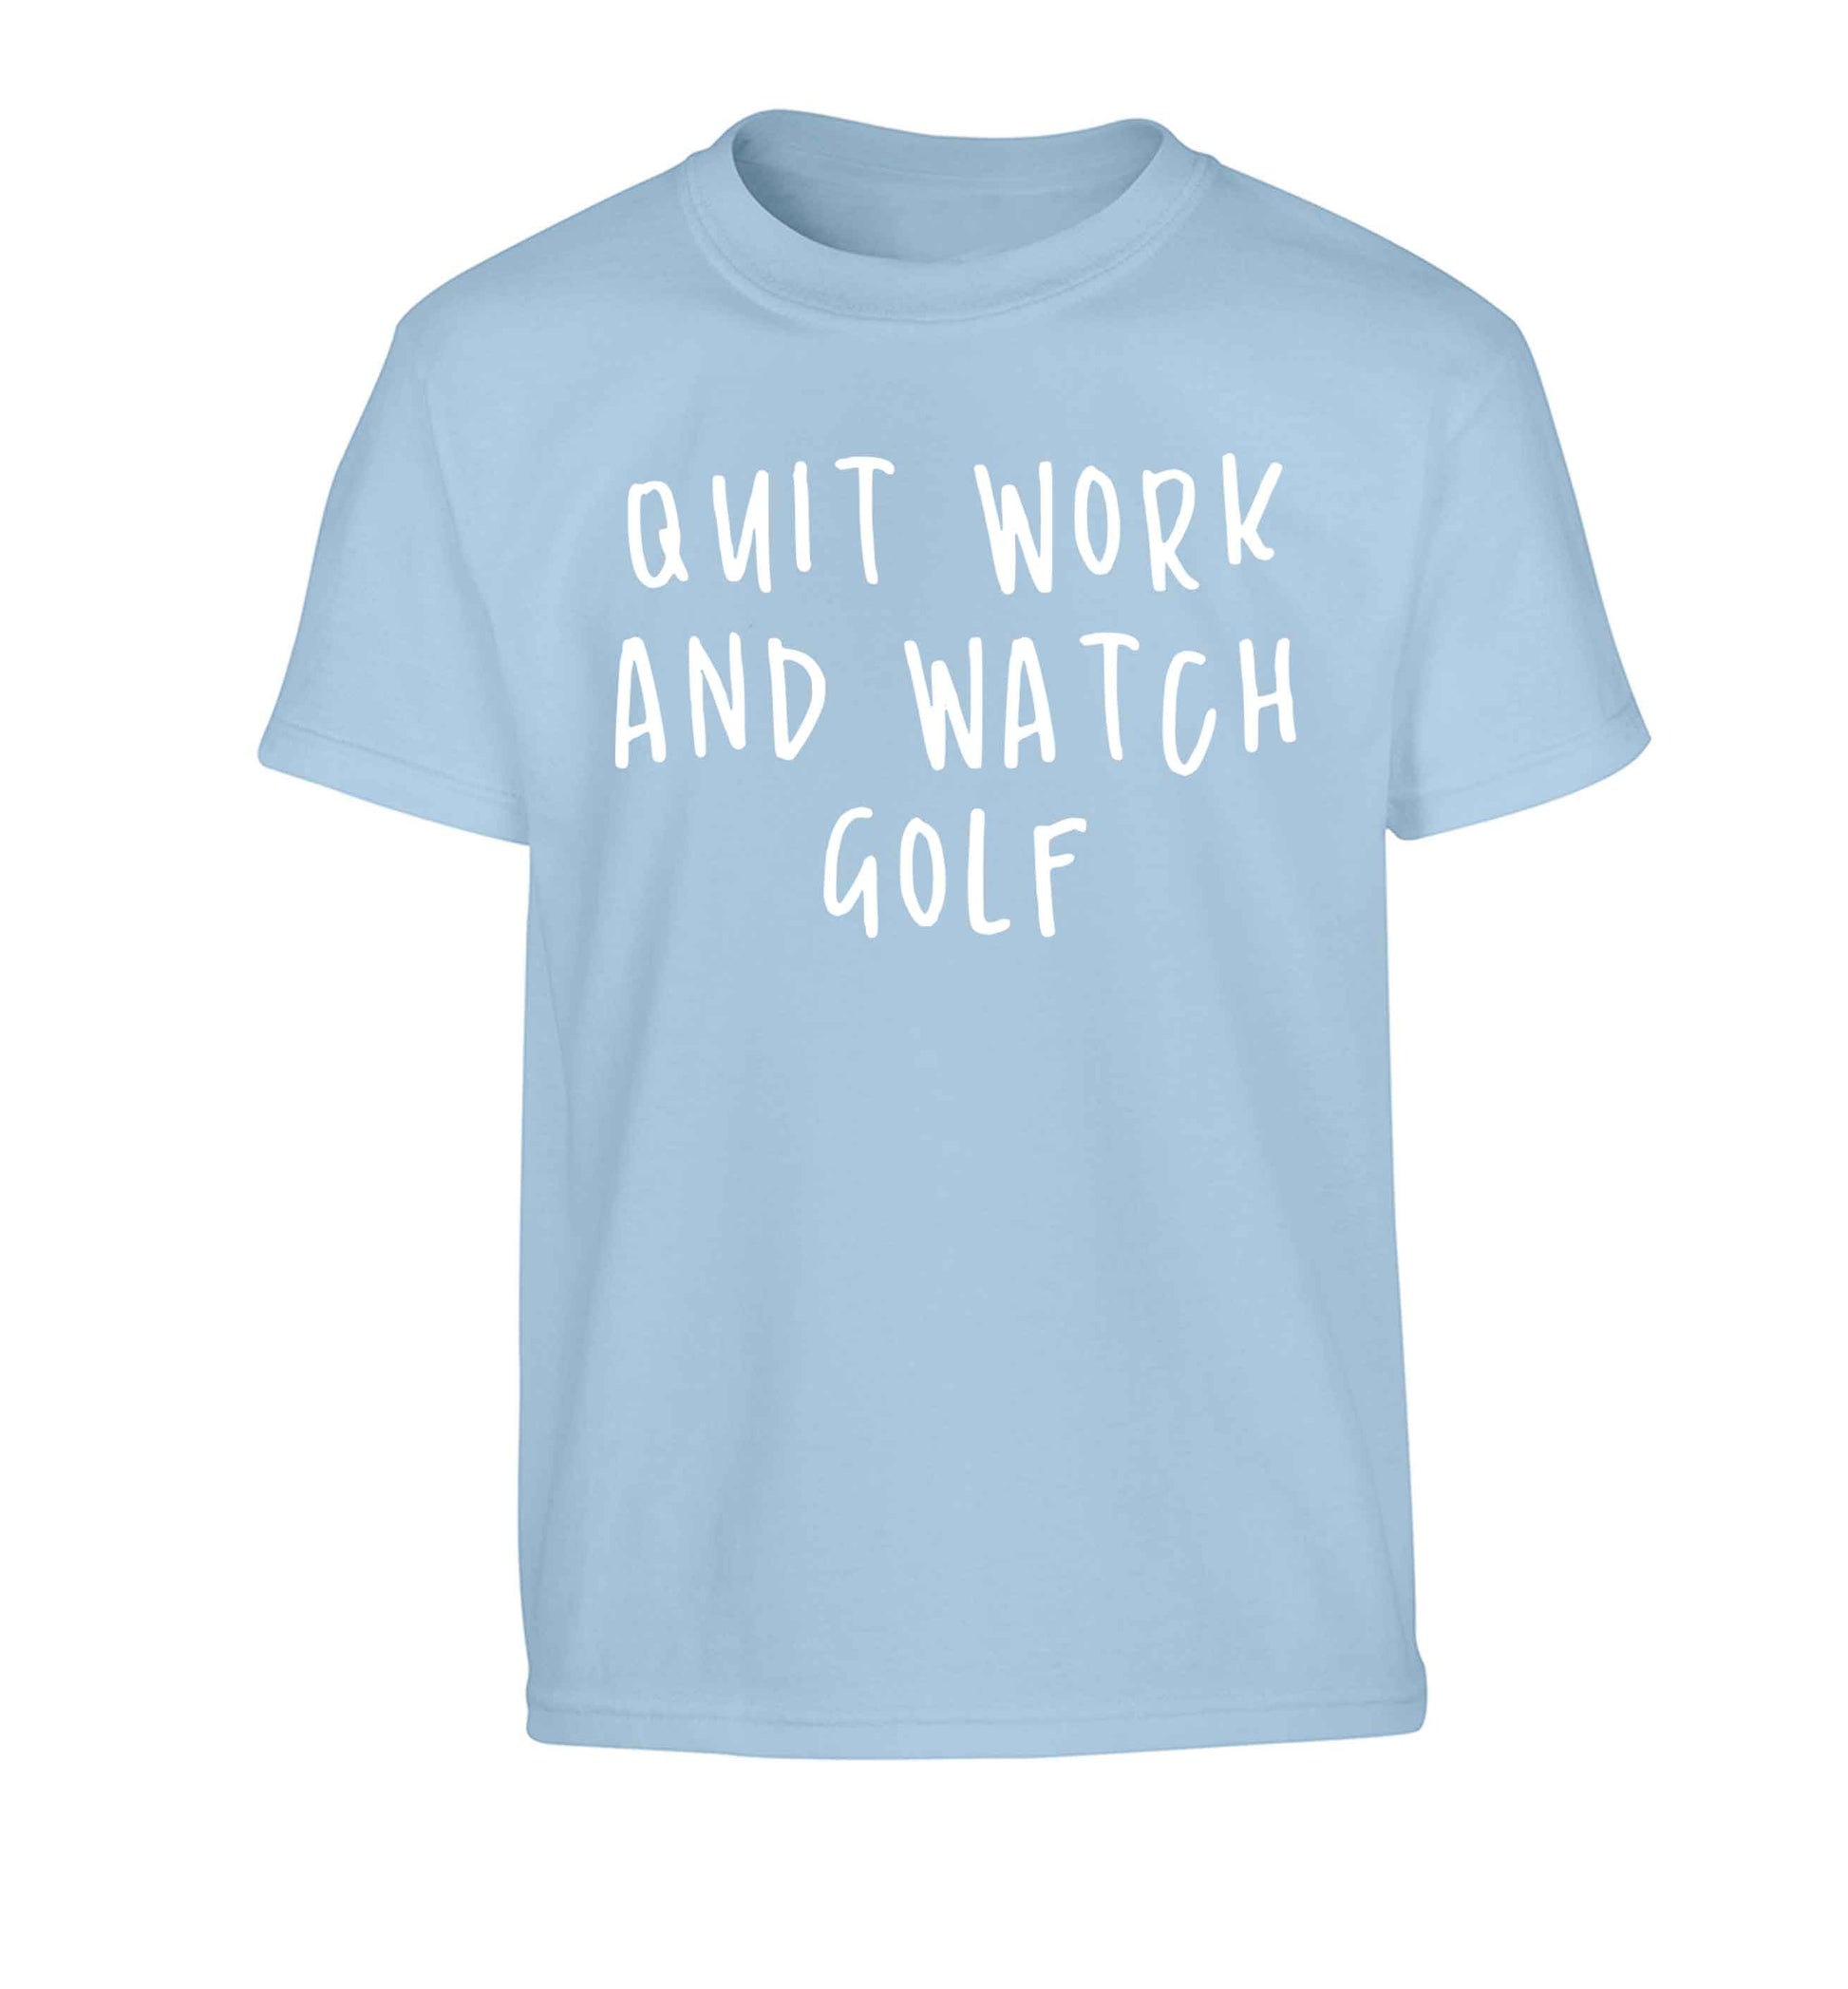 Quit work and watch golf Children's light blue Tshirt 12-13 Years